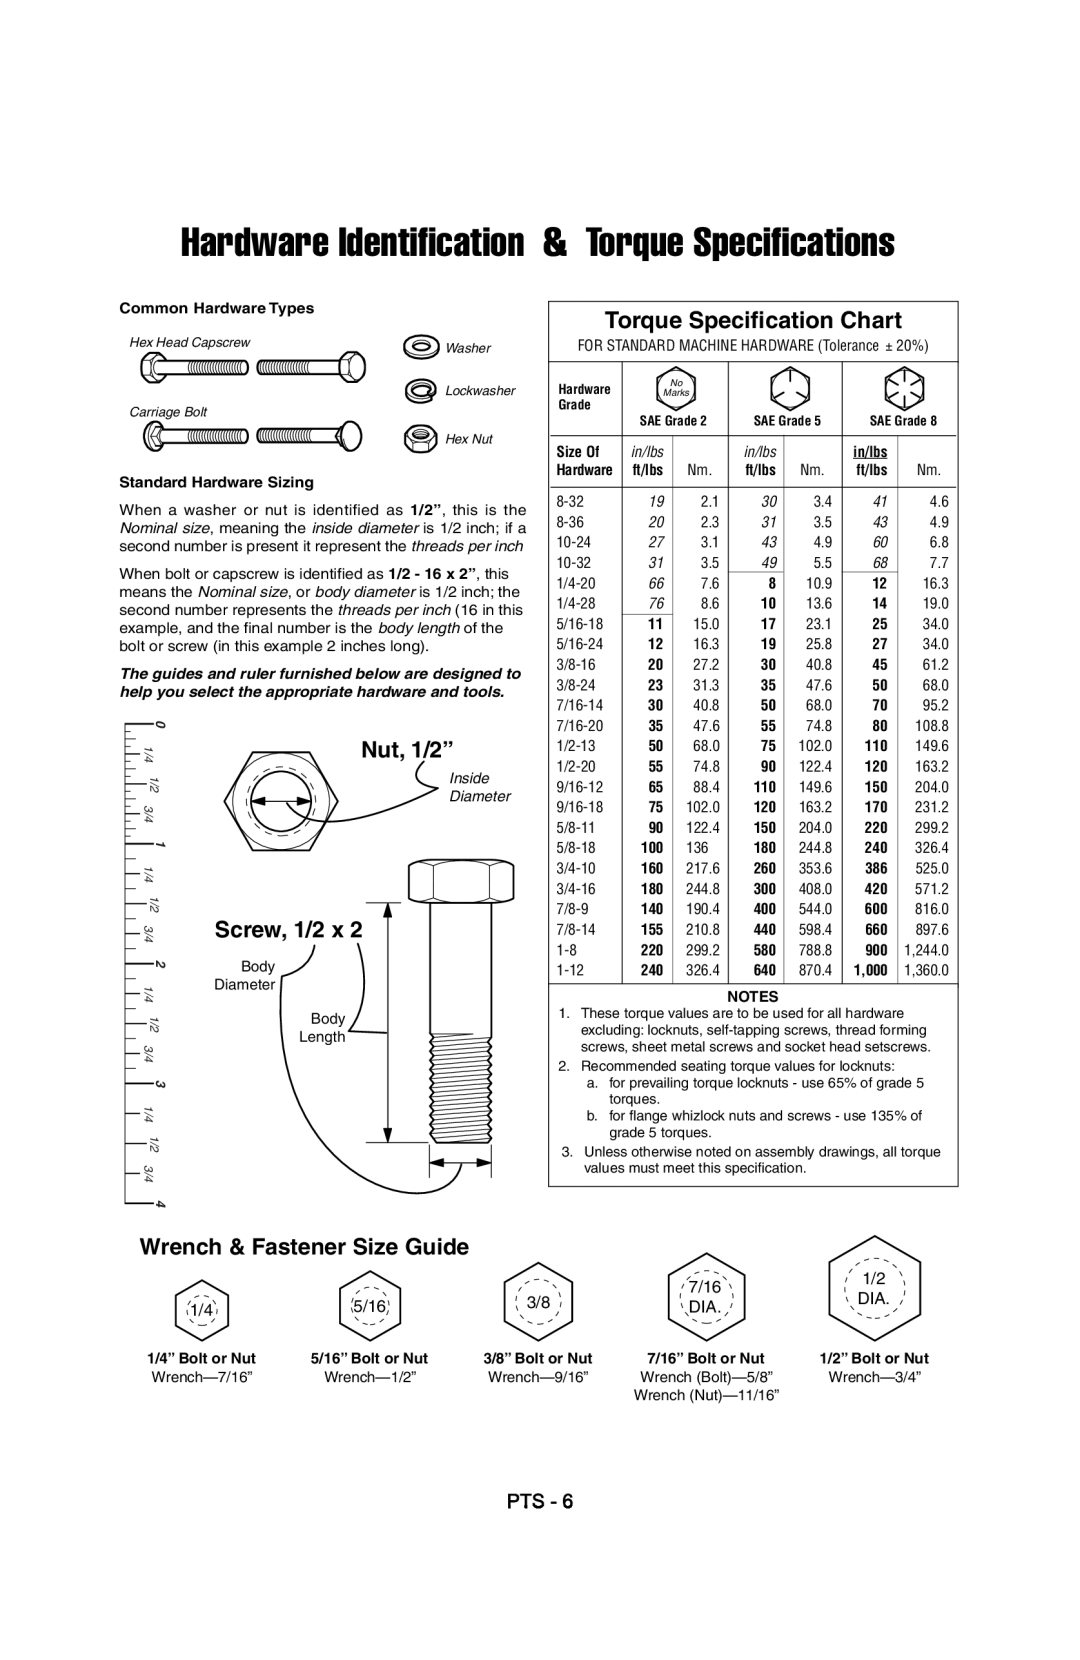 Hayter Mowers 407F Torque Specification Chart, Hardware Identification & Torque Specifications, Nut, 1/2”, Screw, 1/2 